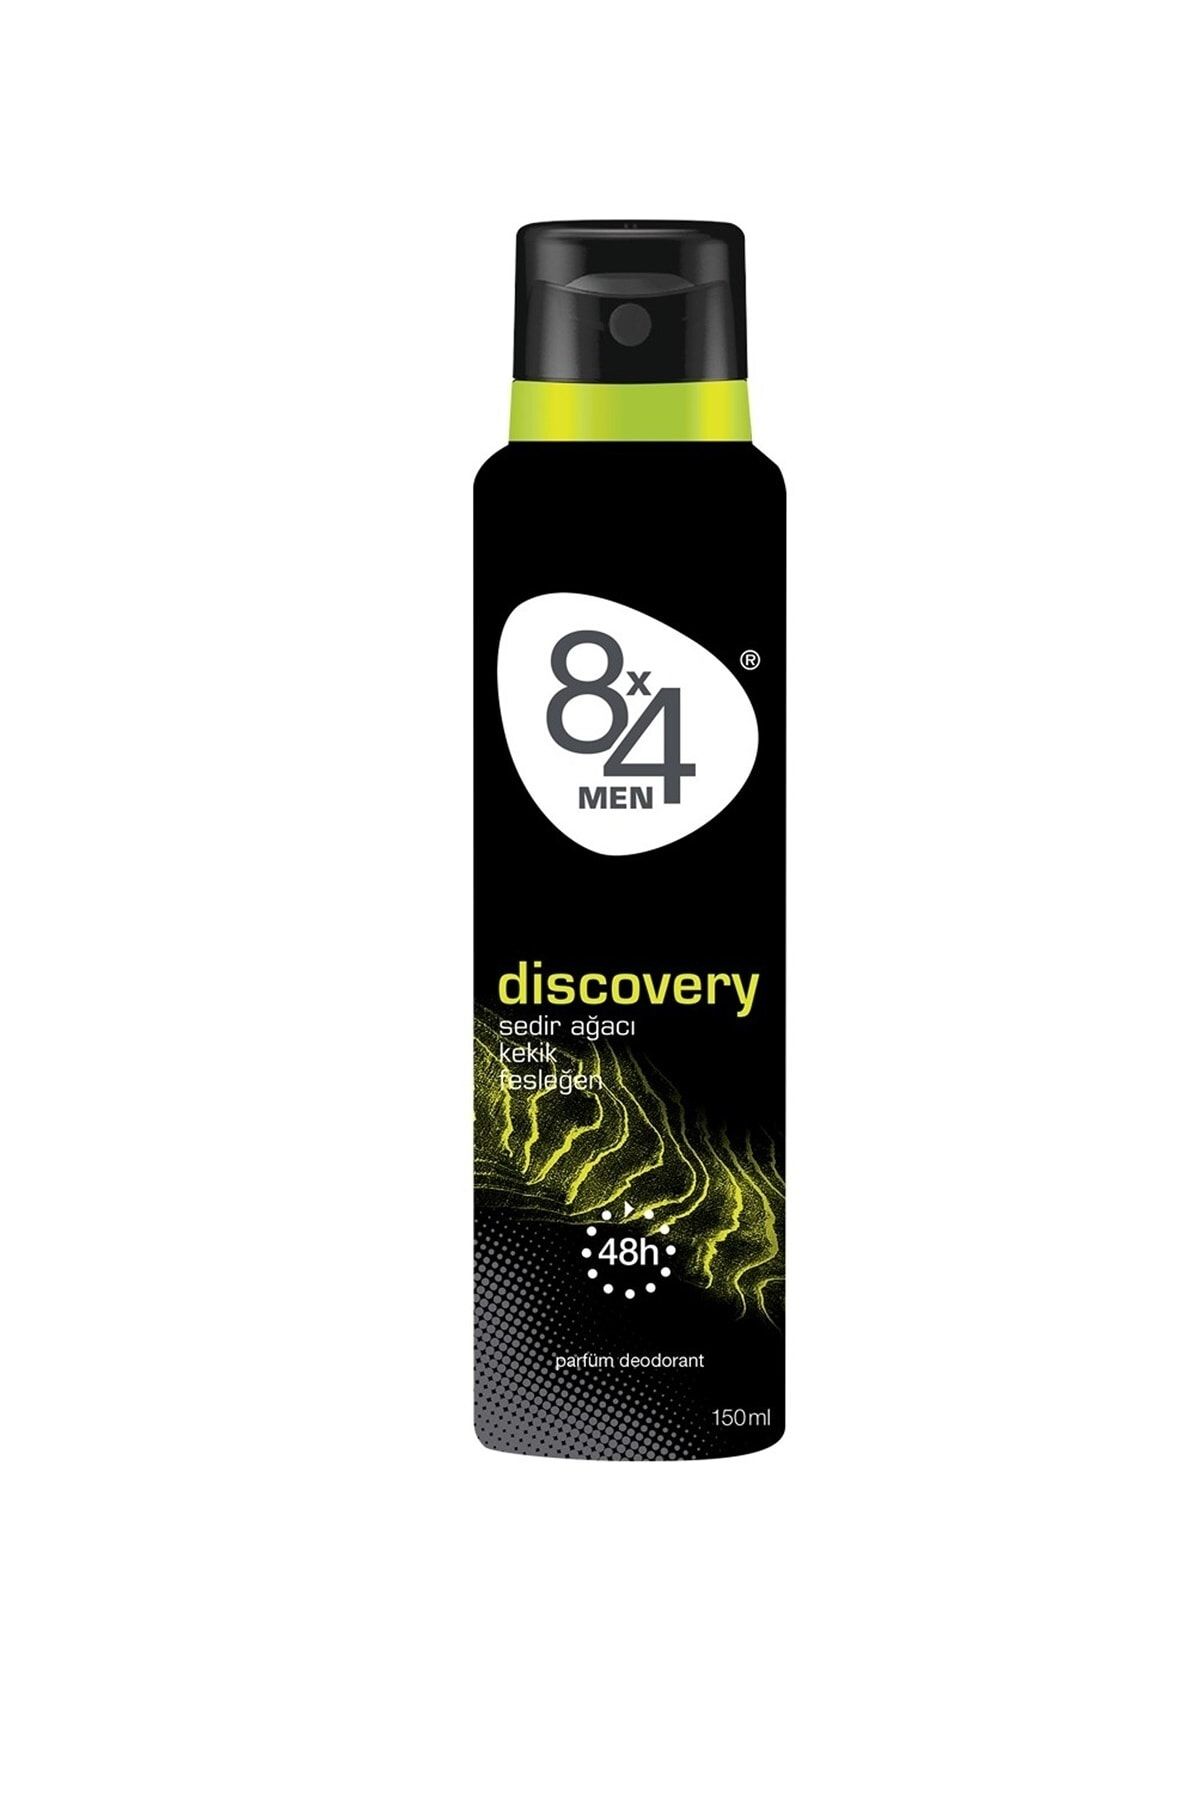 8x4 Discowery Deodorant 150 ml